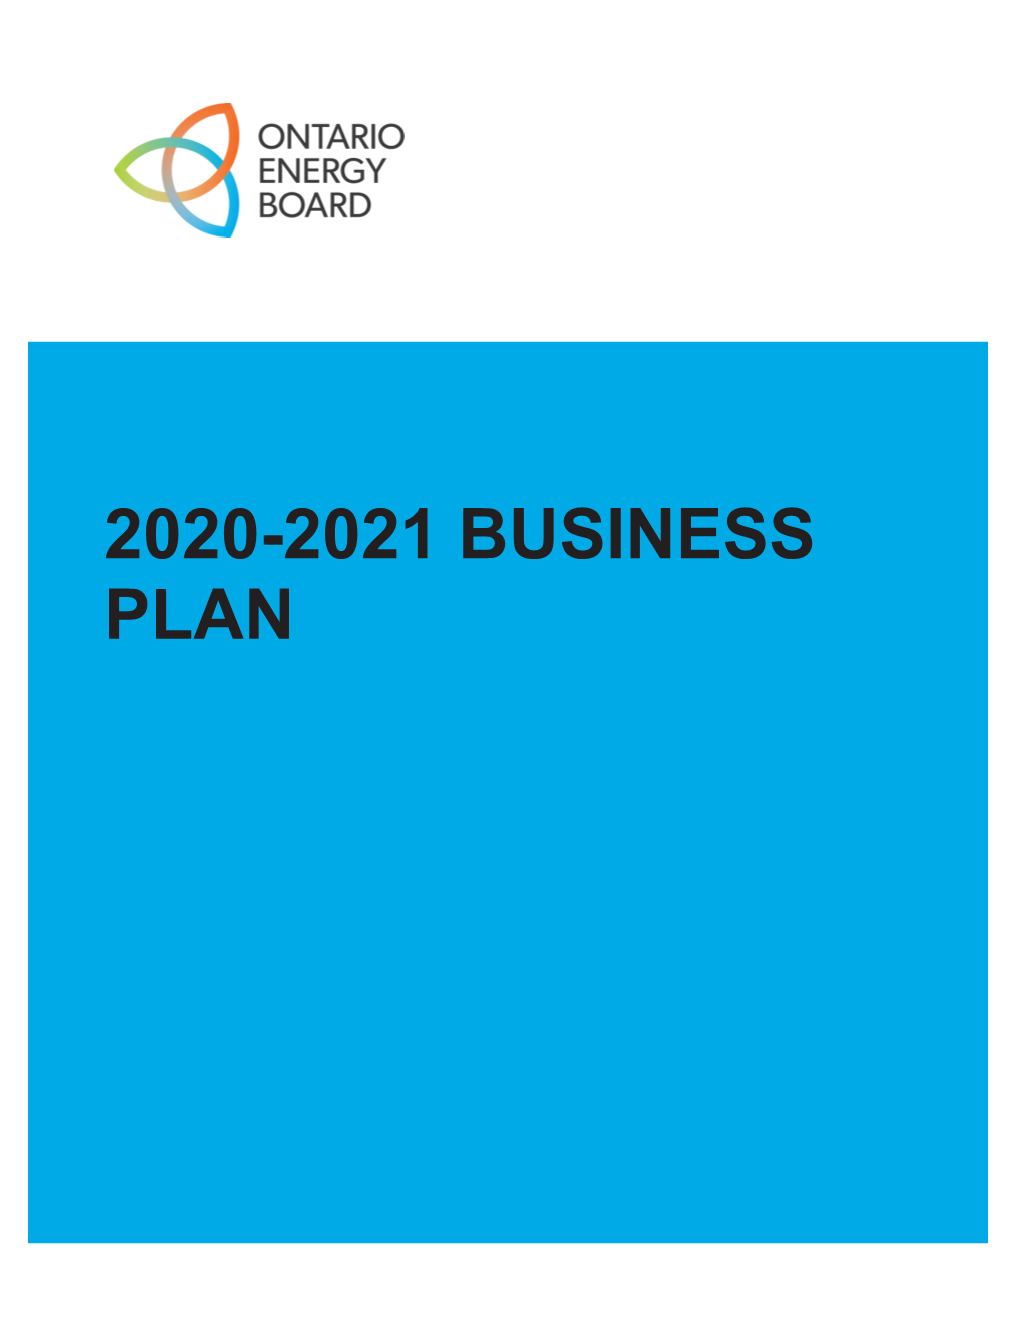 Ontario Energy Board 2020-2021 Business Plan